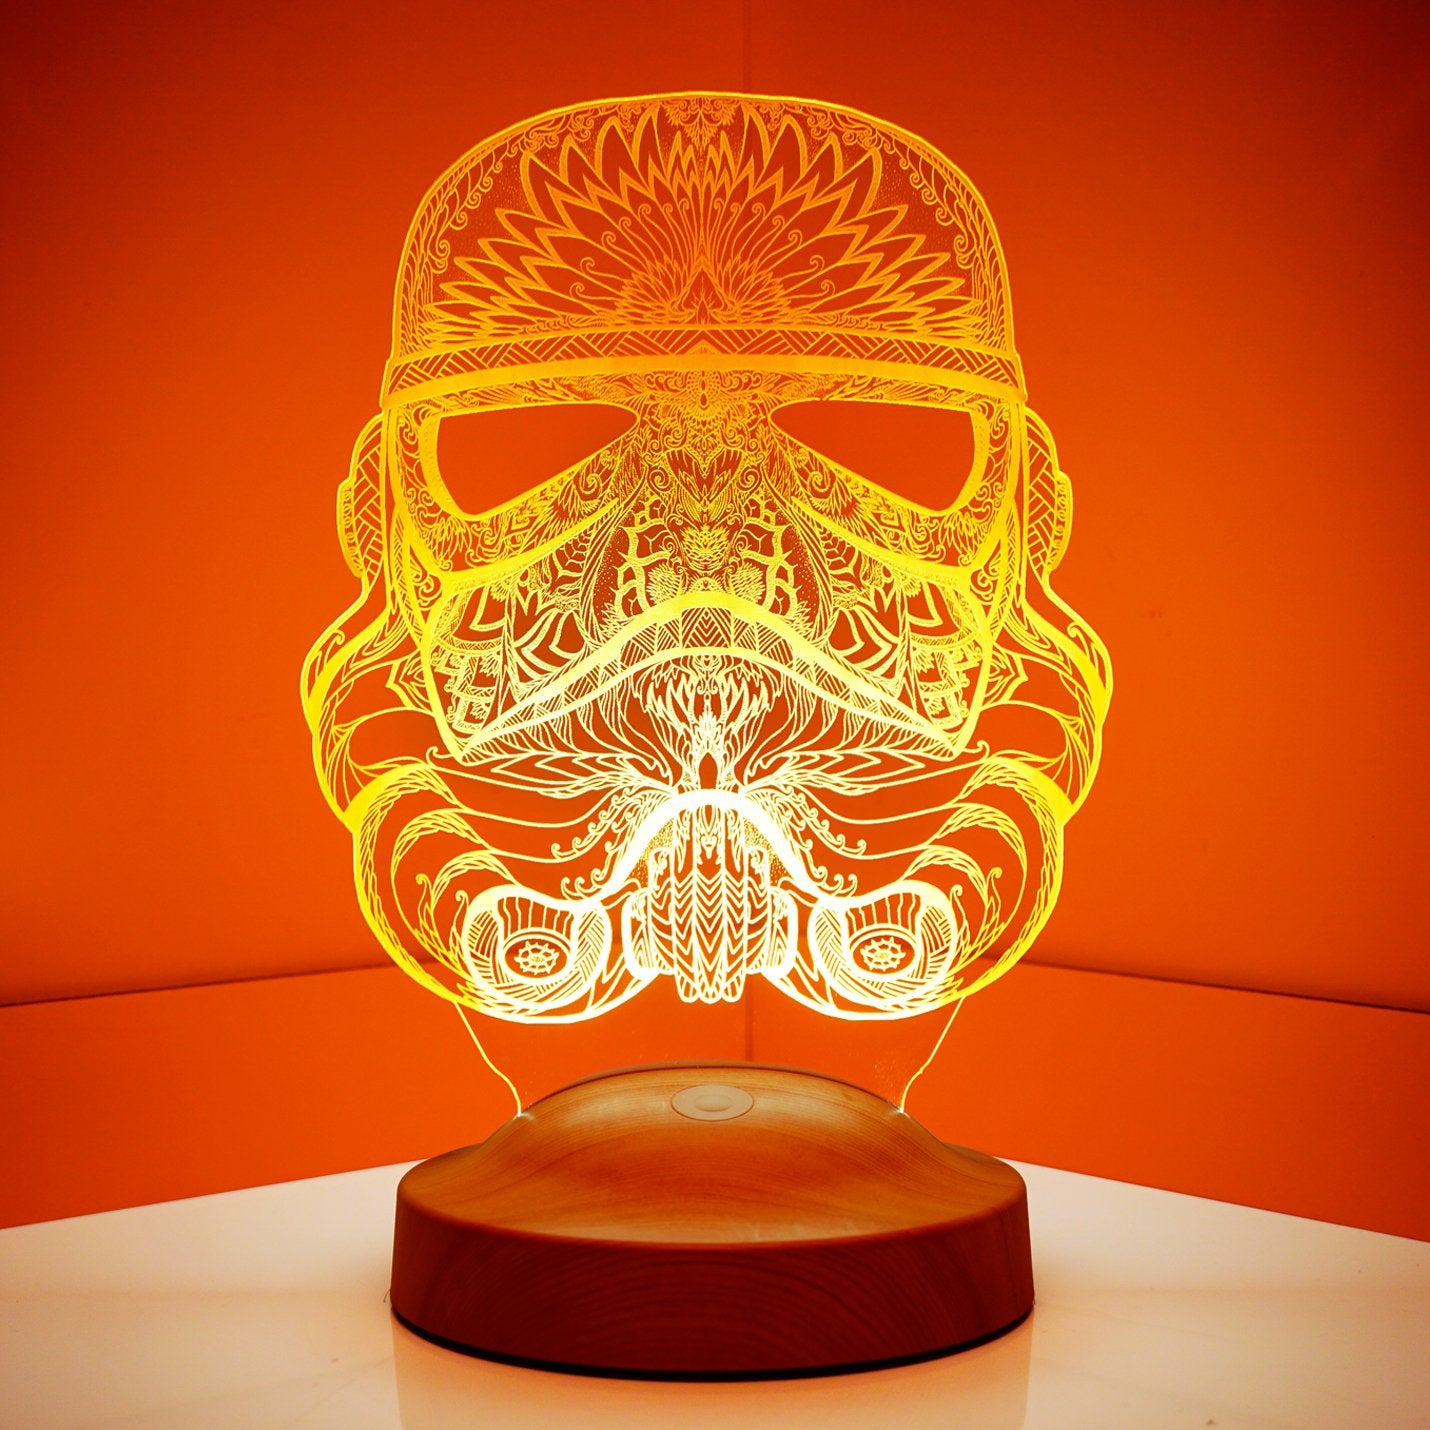 Stormtrooper lamp 3D Vision LED night light